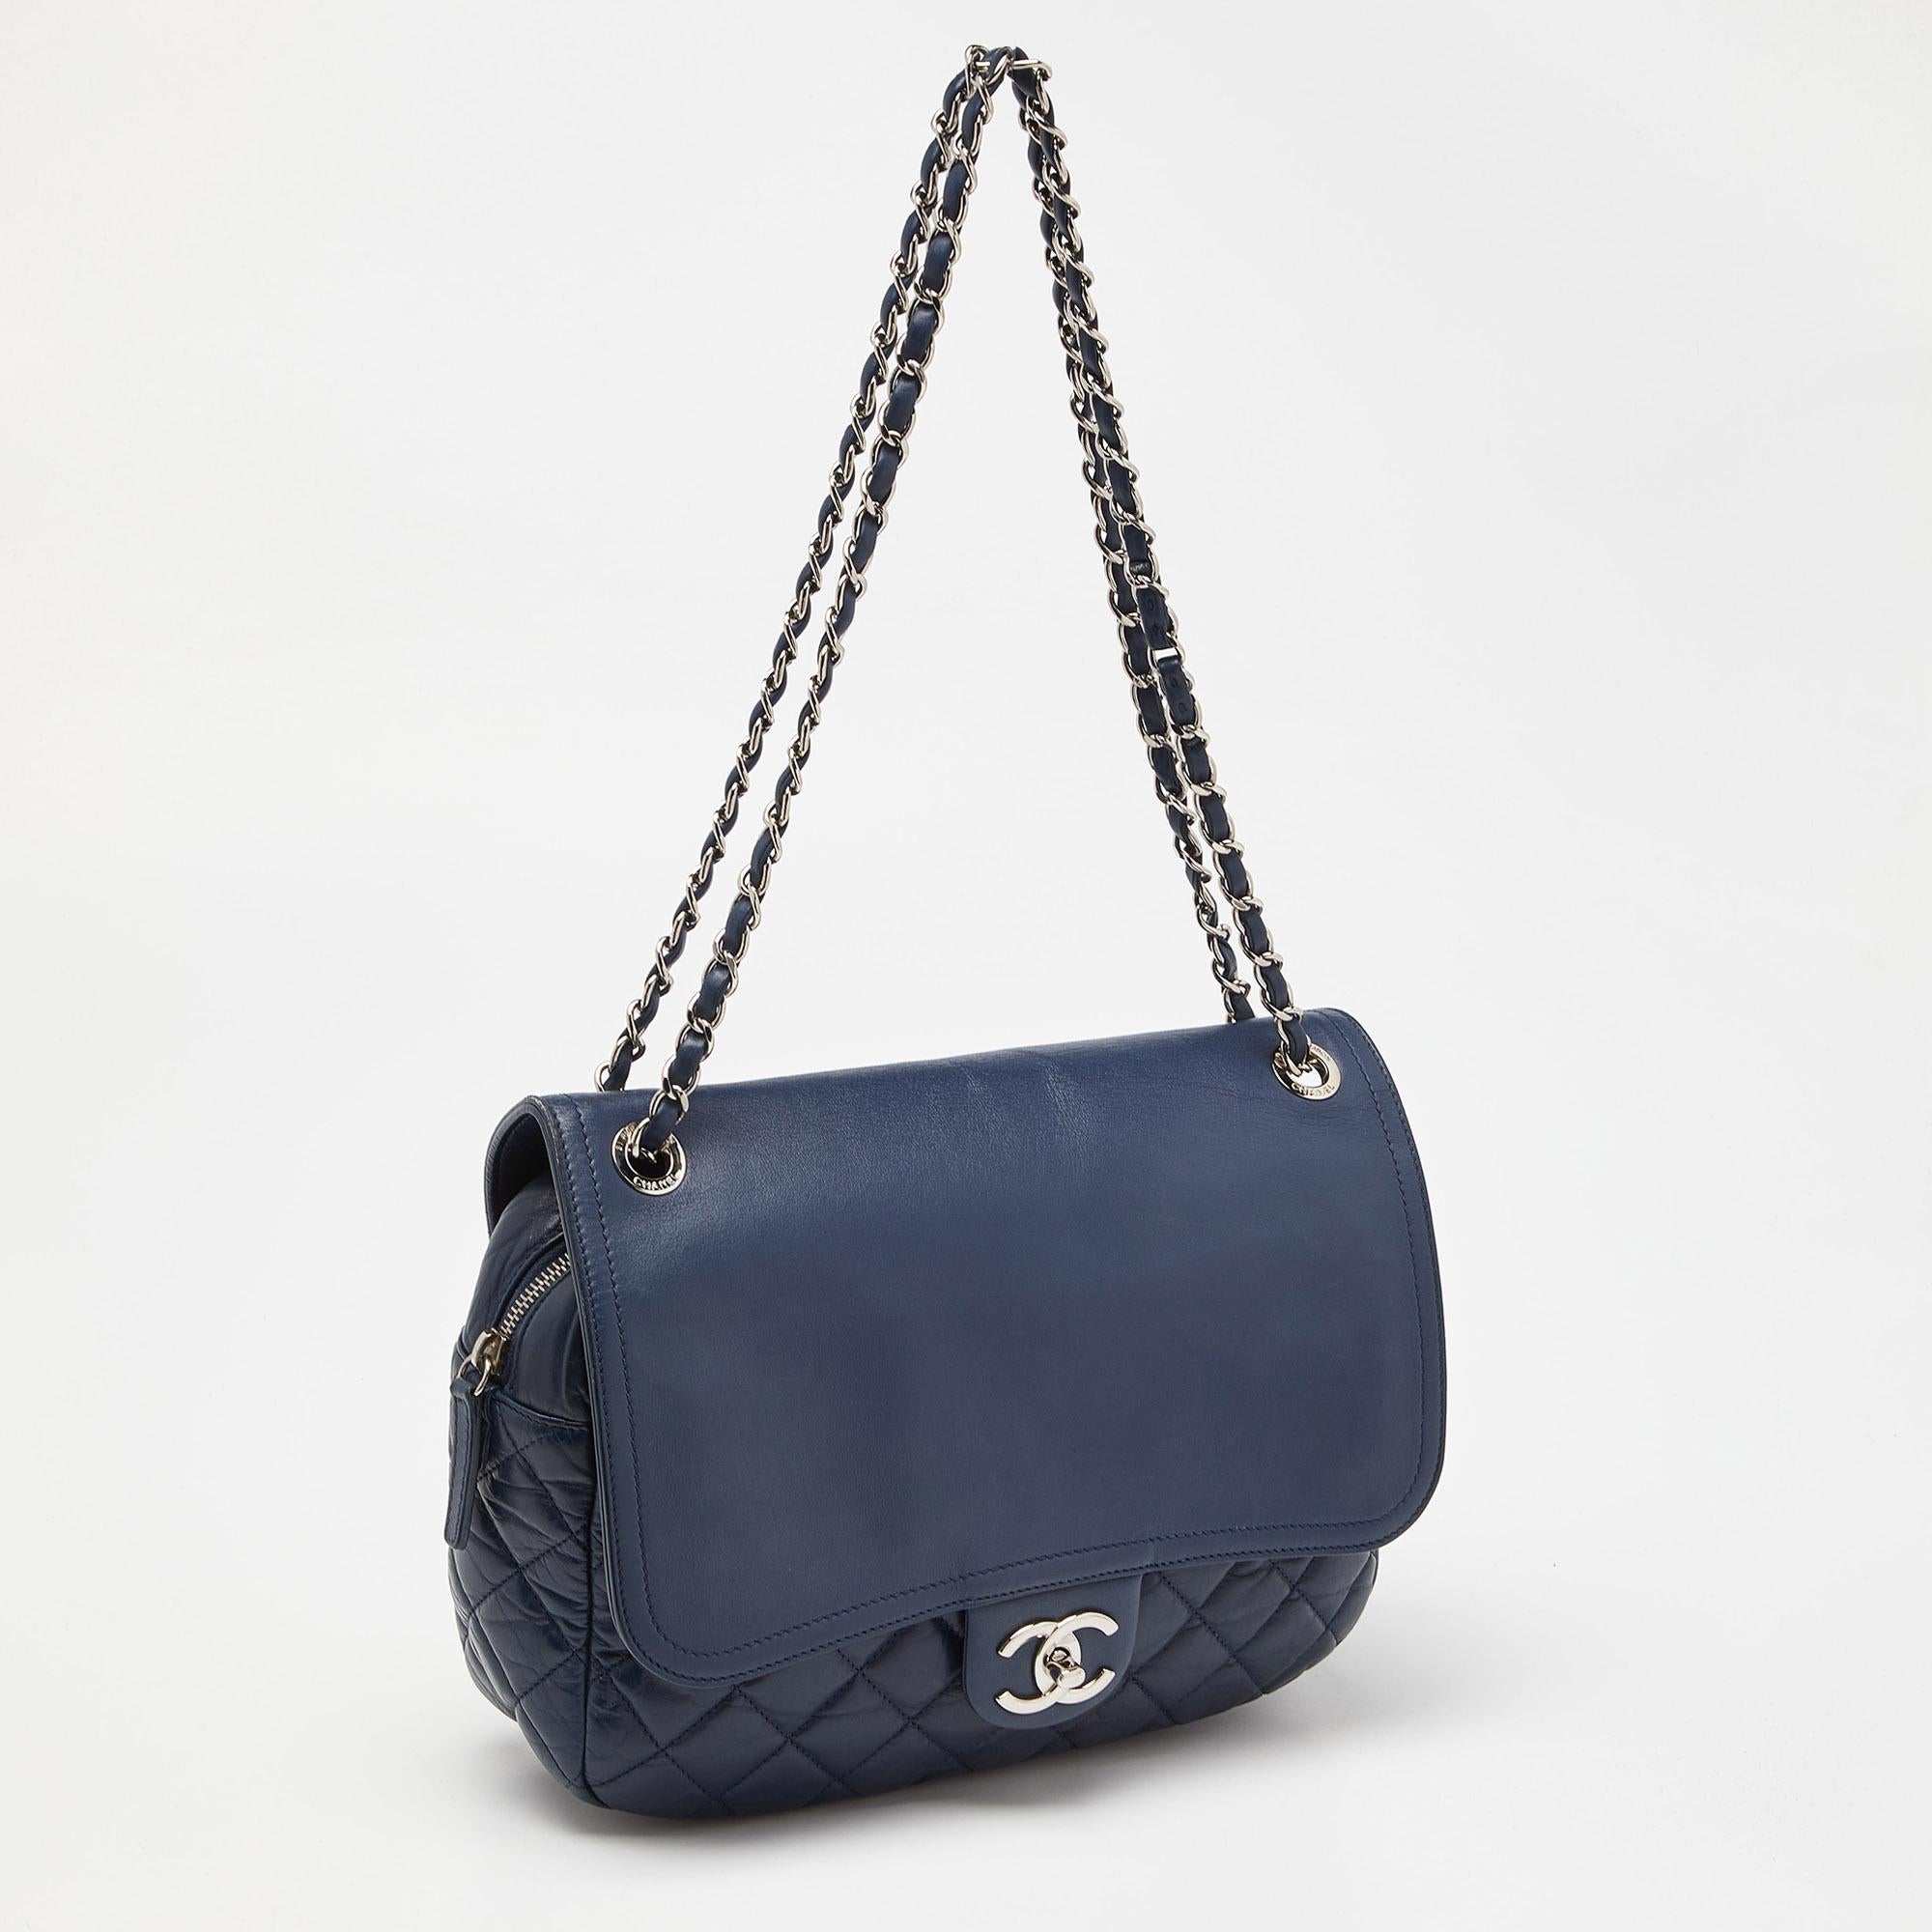 Chanel Blue Quilted Aged Leather Flap Shoulder Bag For Sale 5